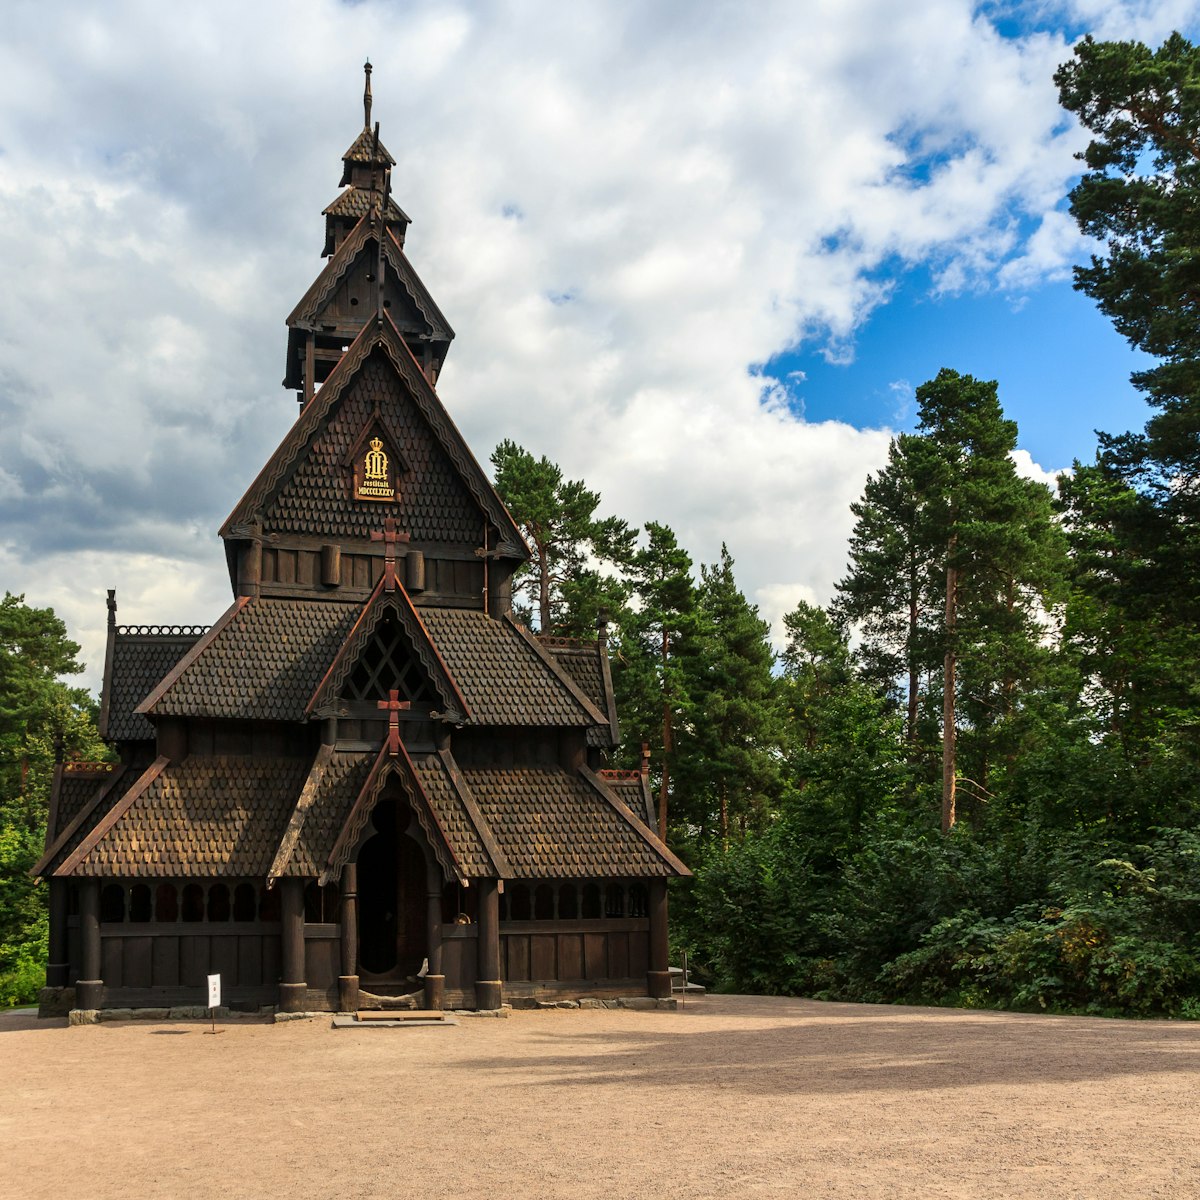 The Gol Stave Church of the Norwegian Folk Museum